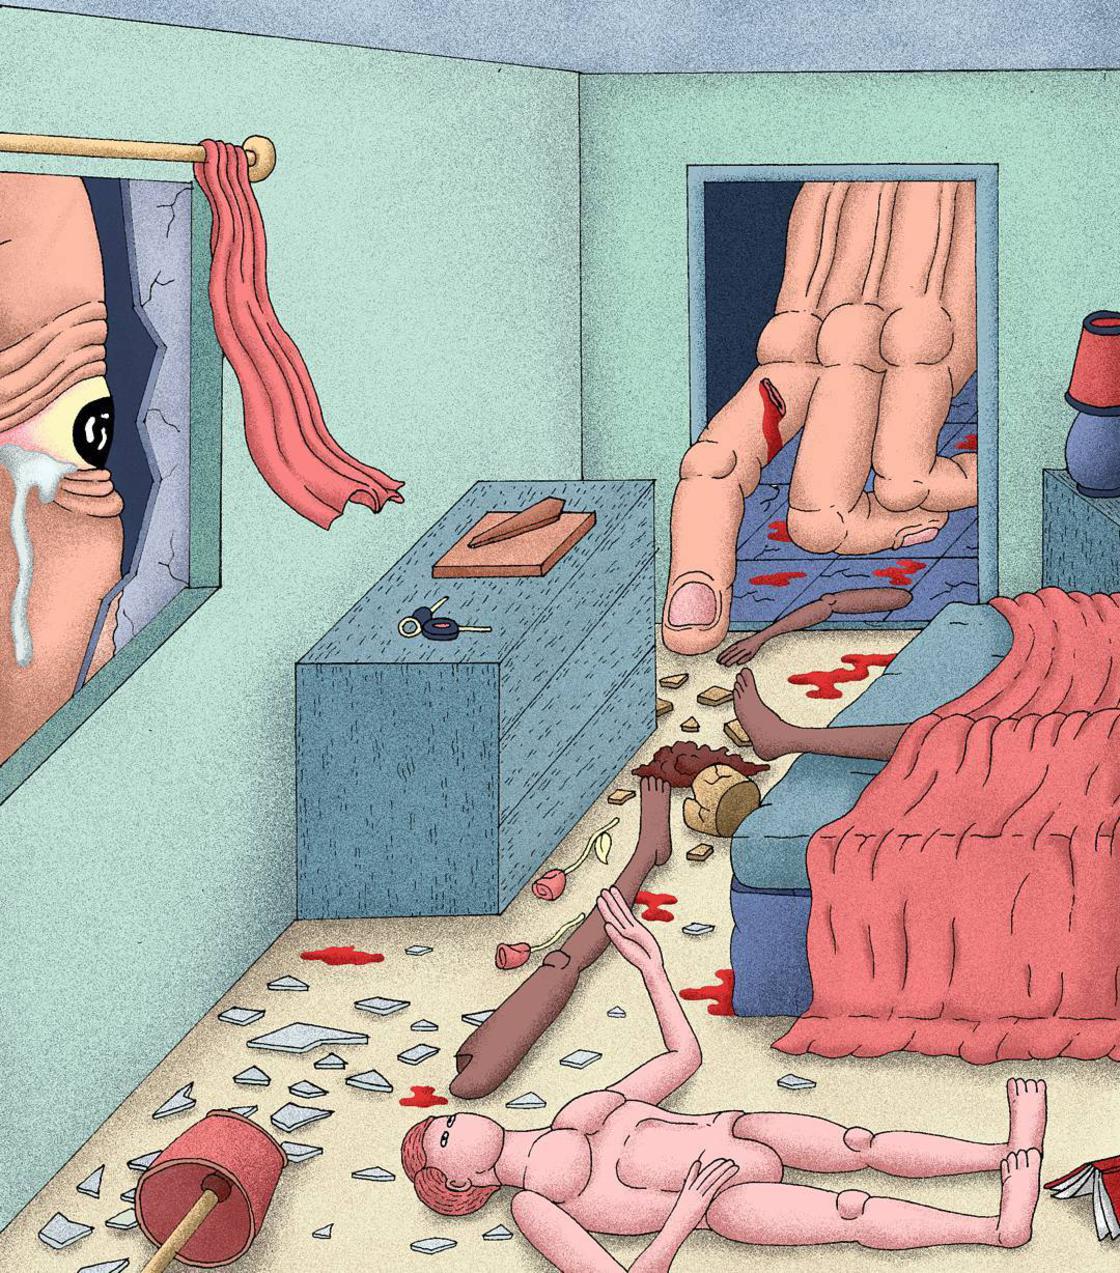 Awesome Weird Satirical Illustrations by Alex Gamsu Jenkins